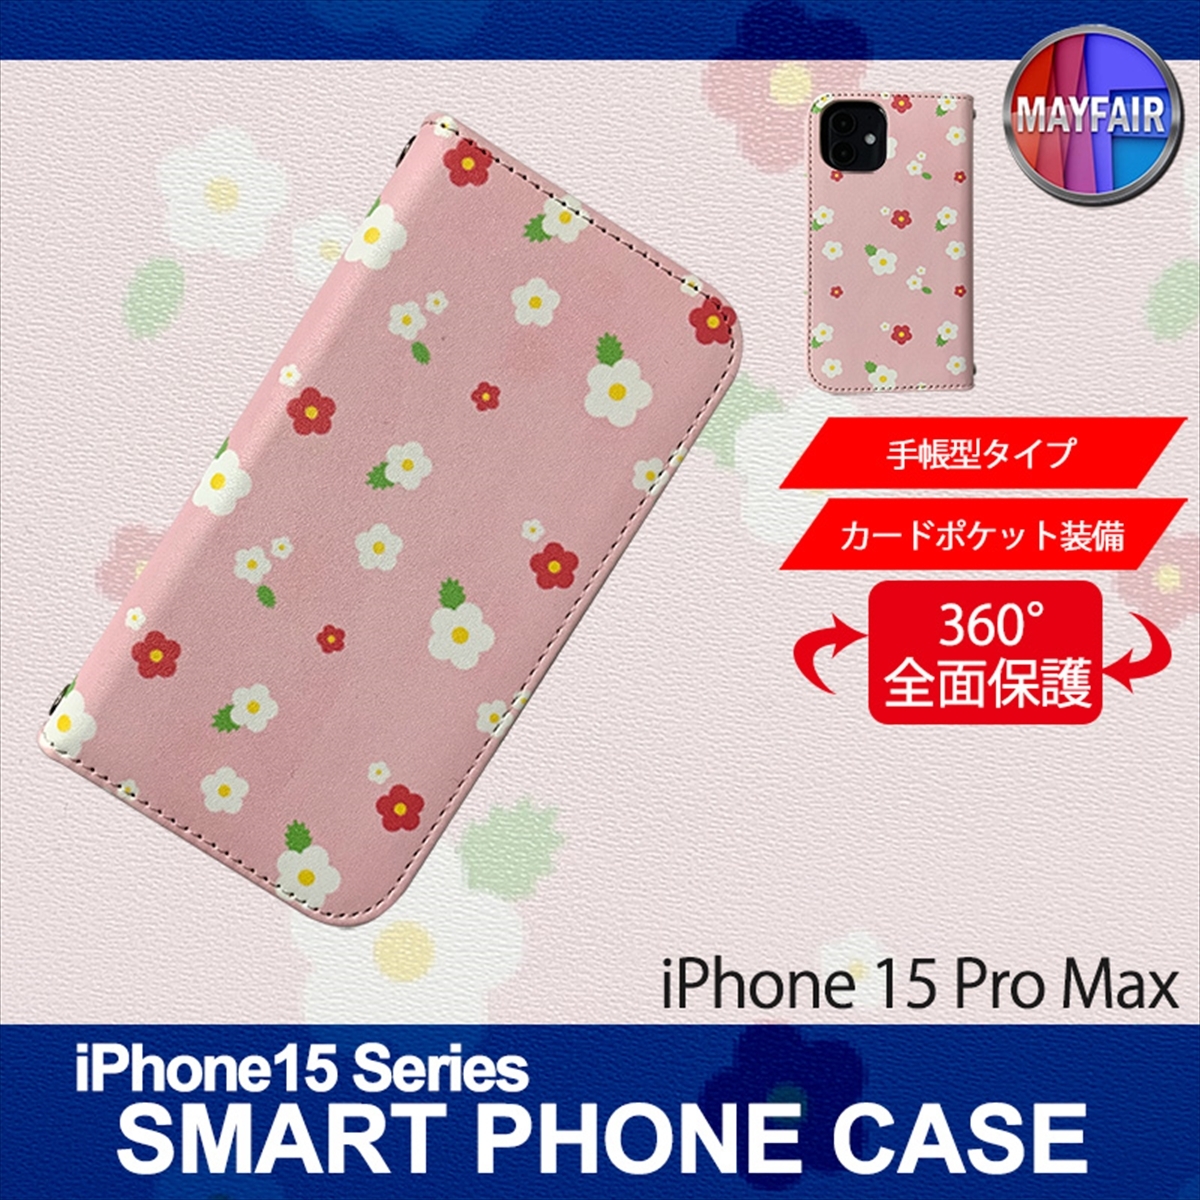 1] iPhone15 Pro Max The Notebook Type Eyipon Case Cover Cover Pvc кожаный цветочный дизайн b